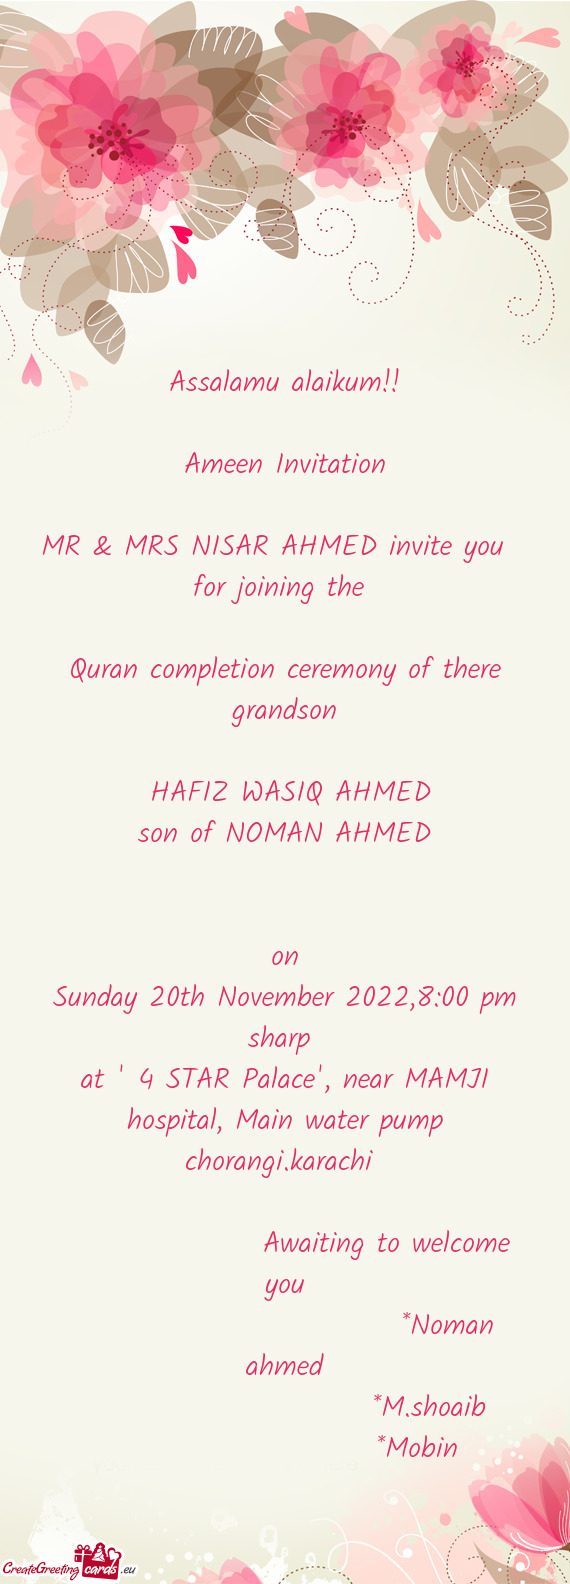 MR & MRS NISAR AHMED invite you